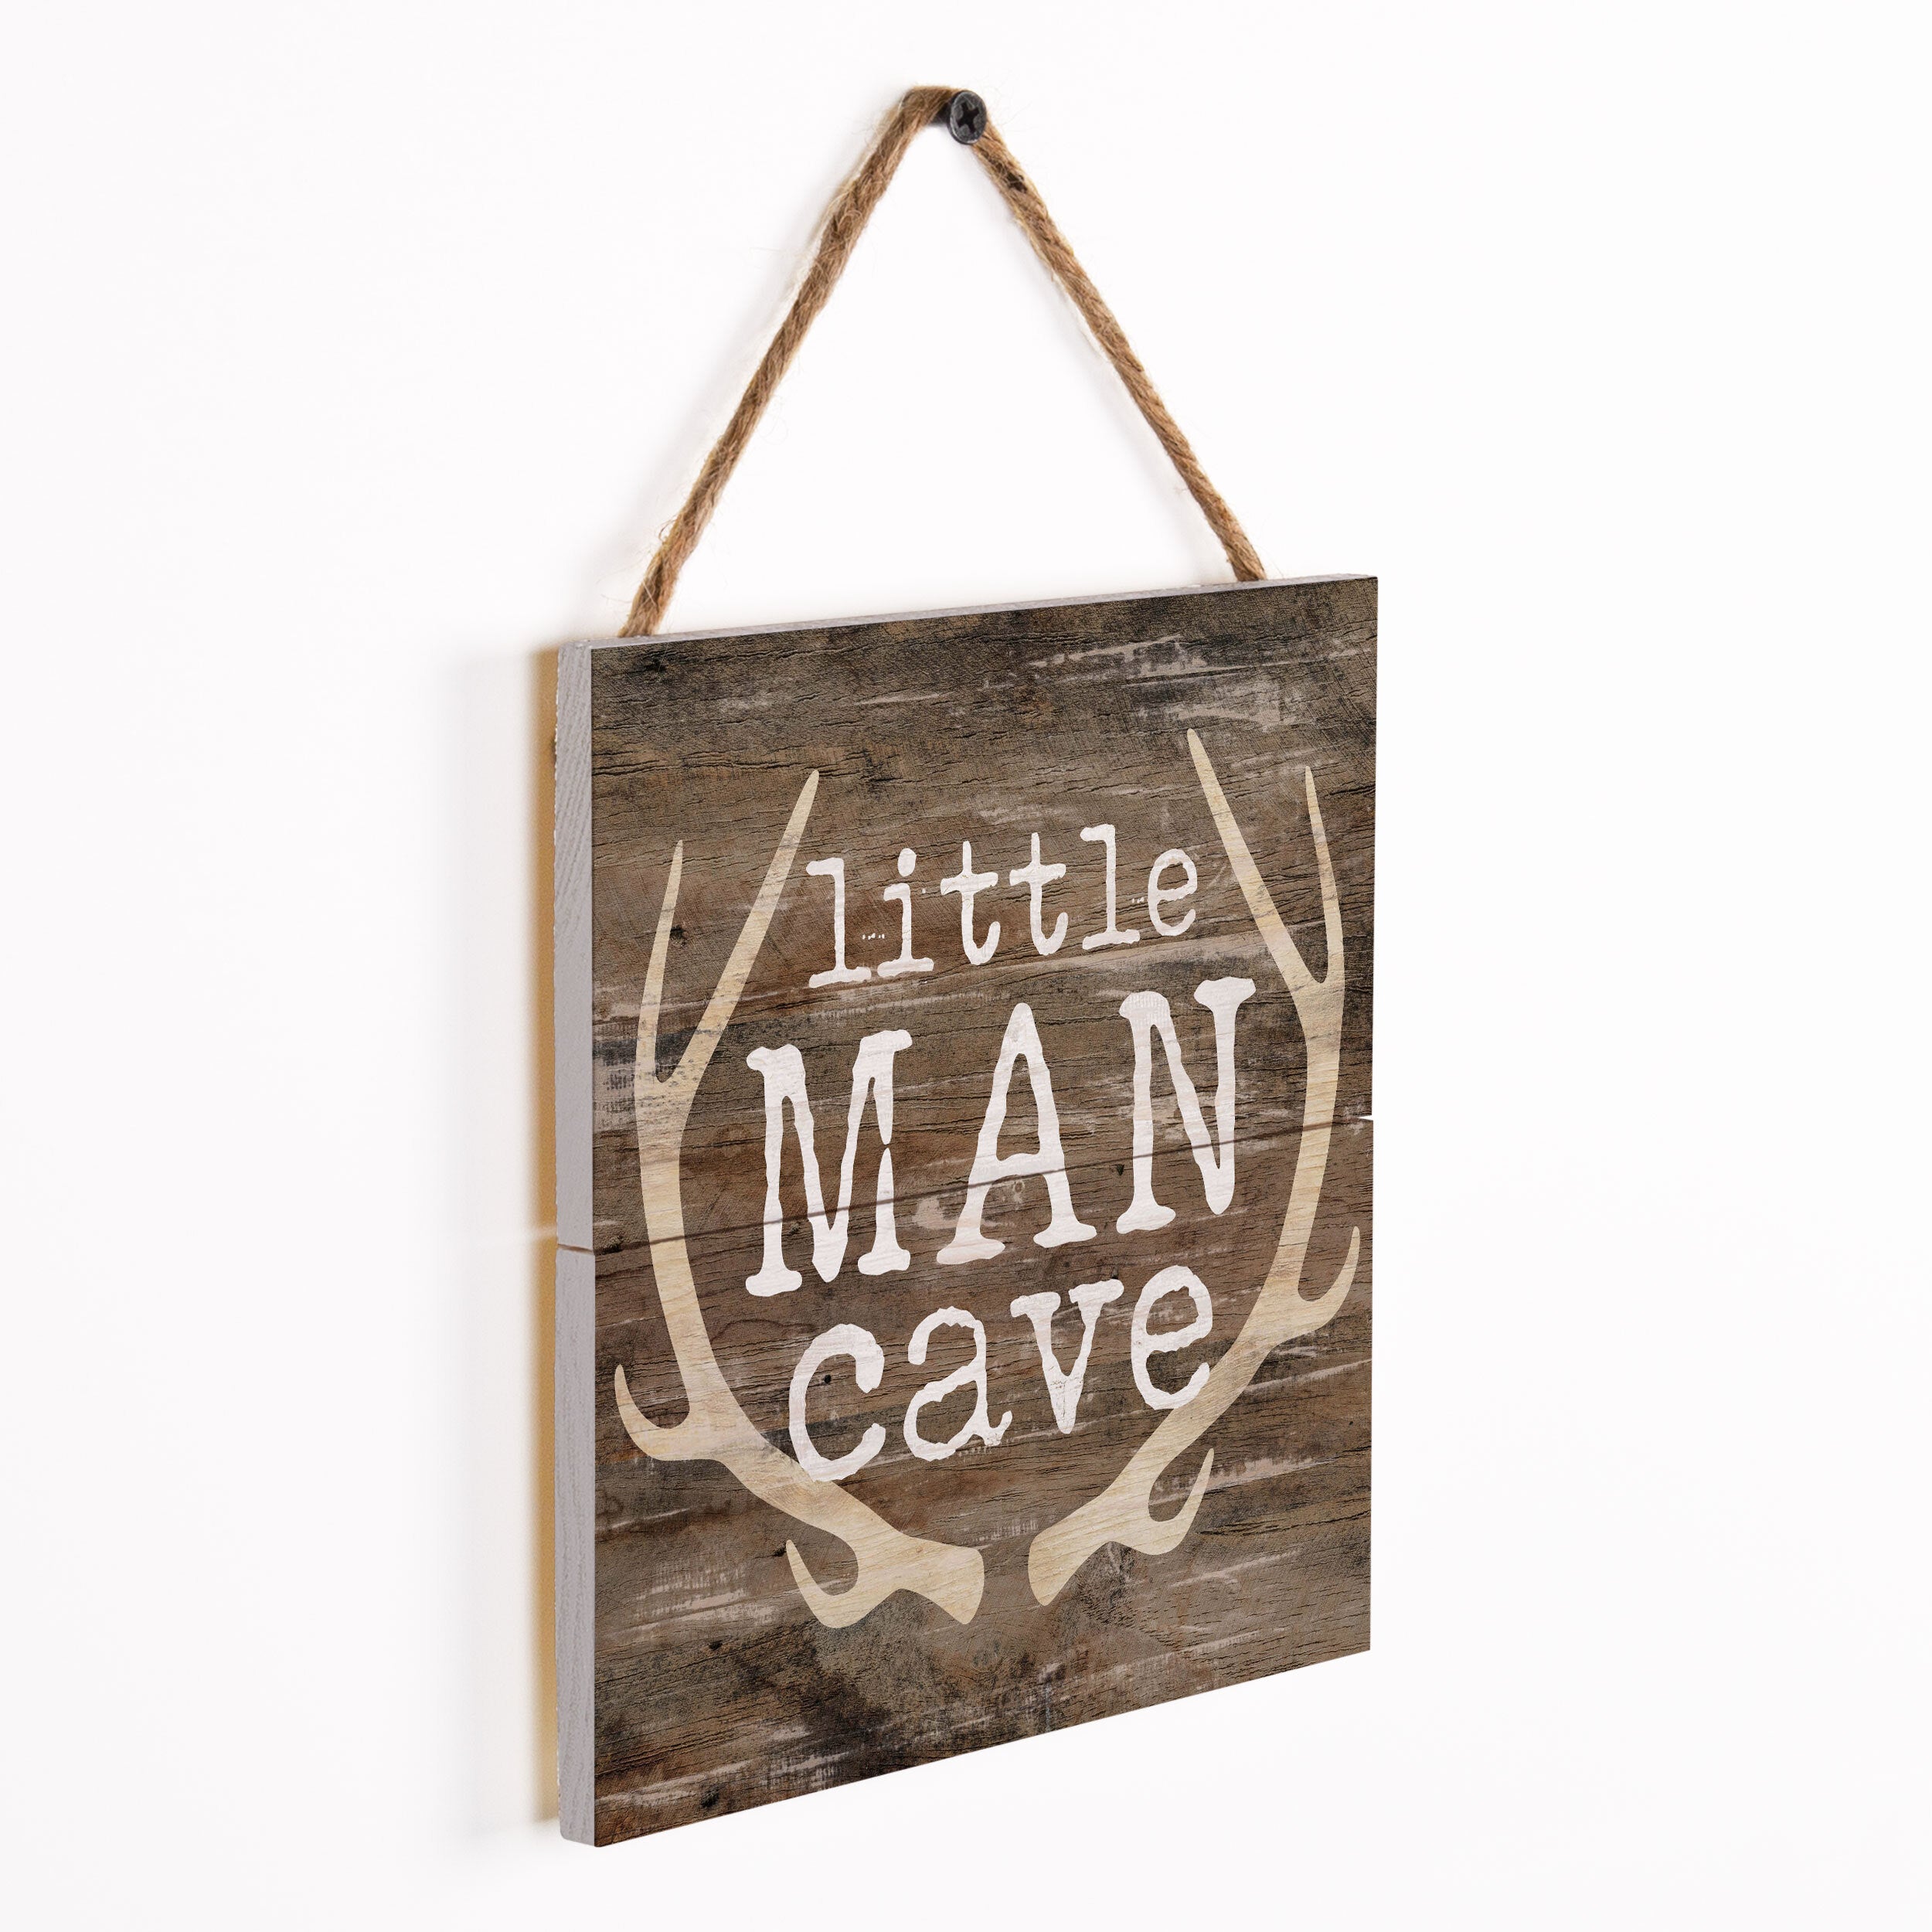 **Little Man Cave String Sign